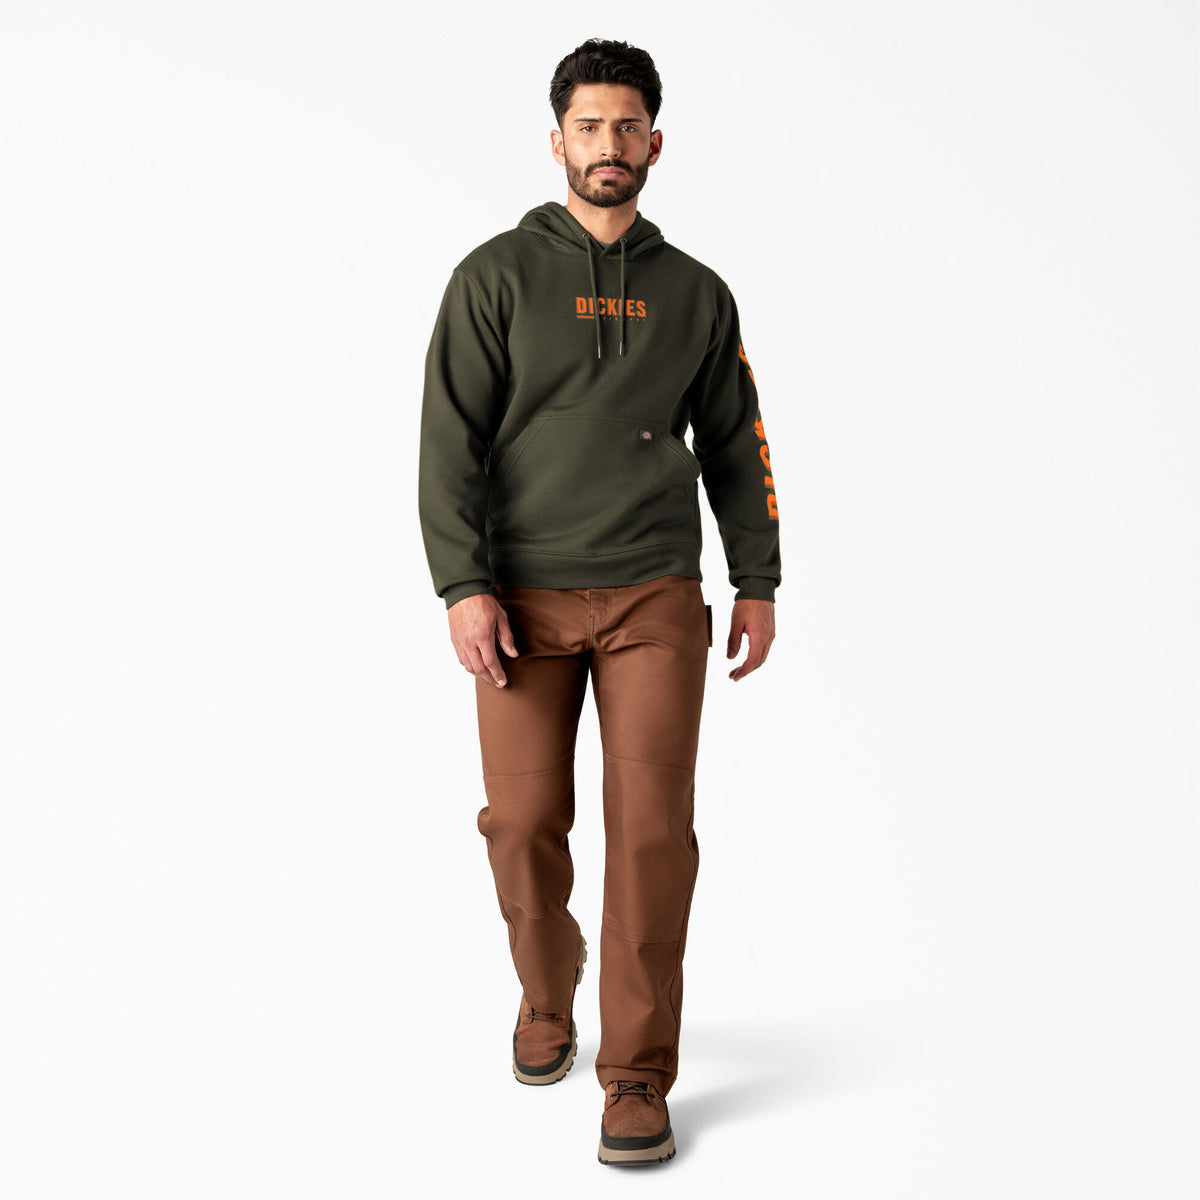 Dickies DWR Graphic Hooded Sweatshirt - Work World - Workwear, Work Boots, Safety Gear